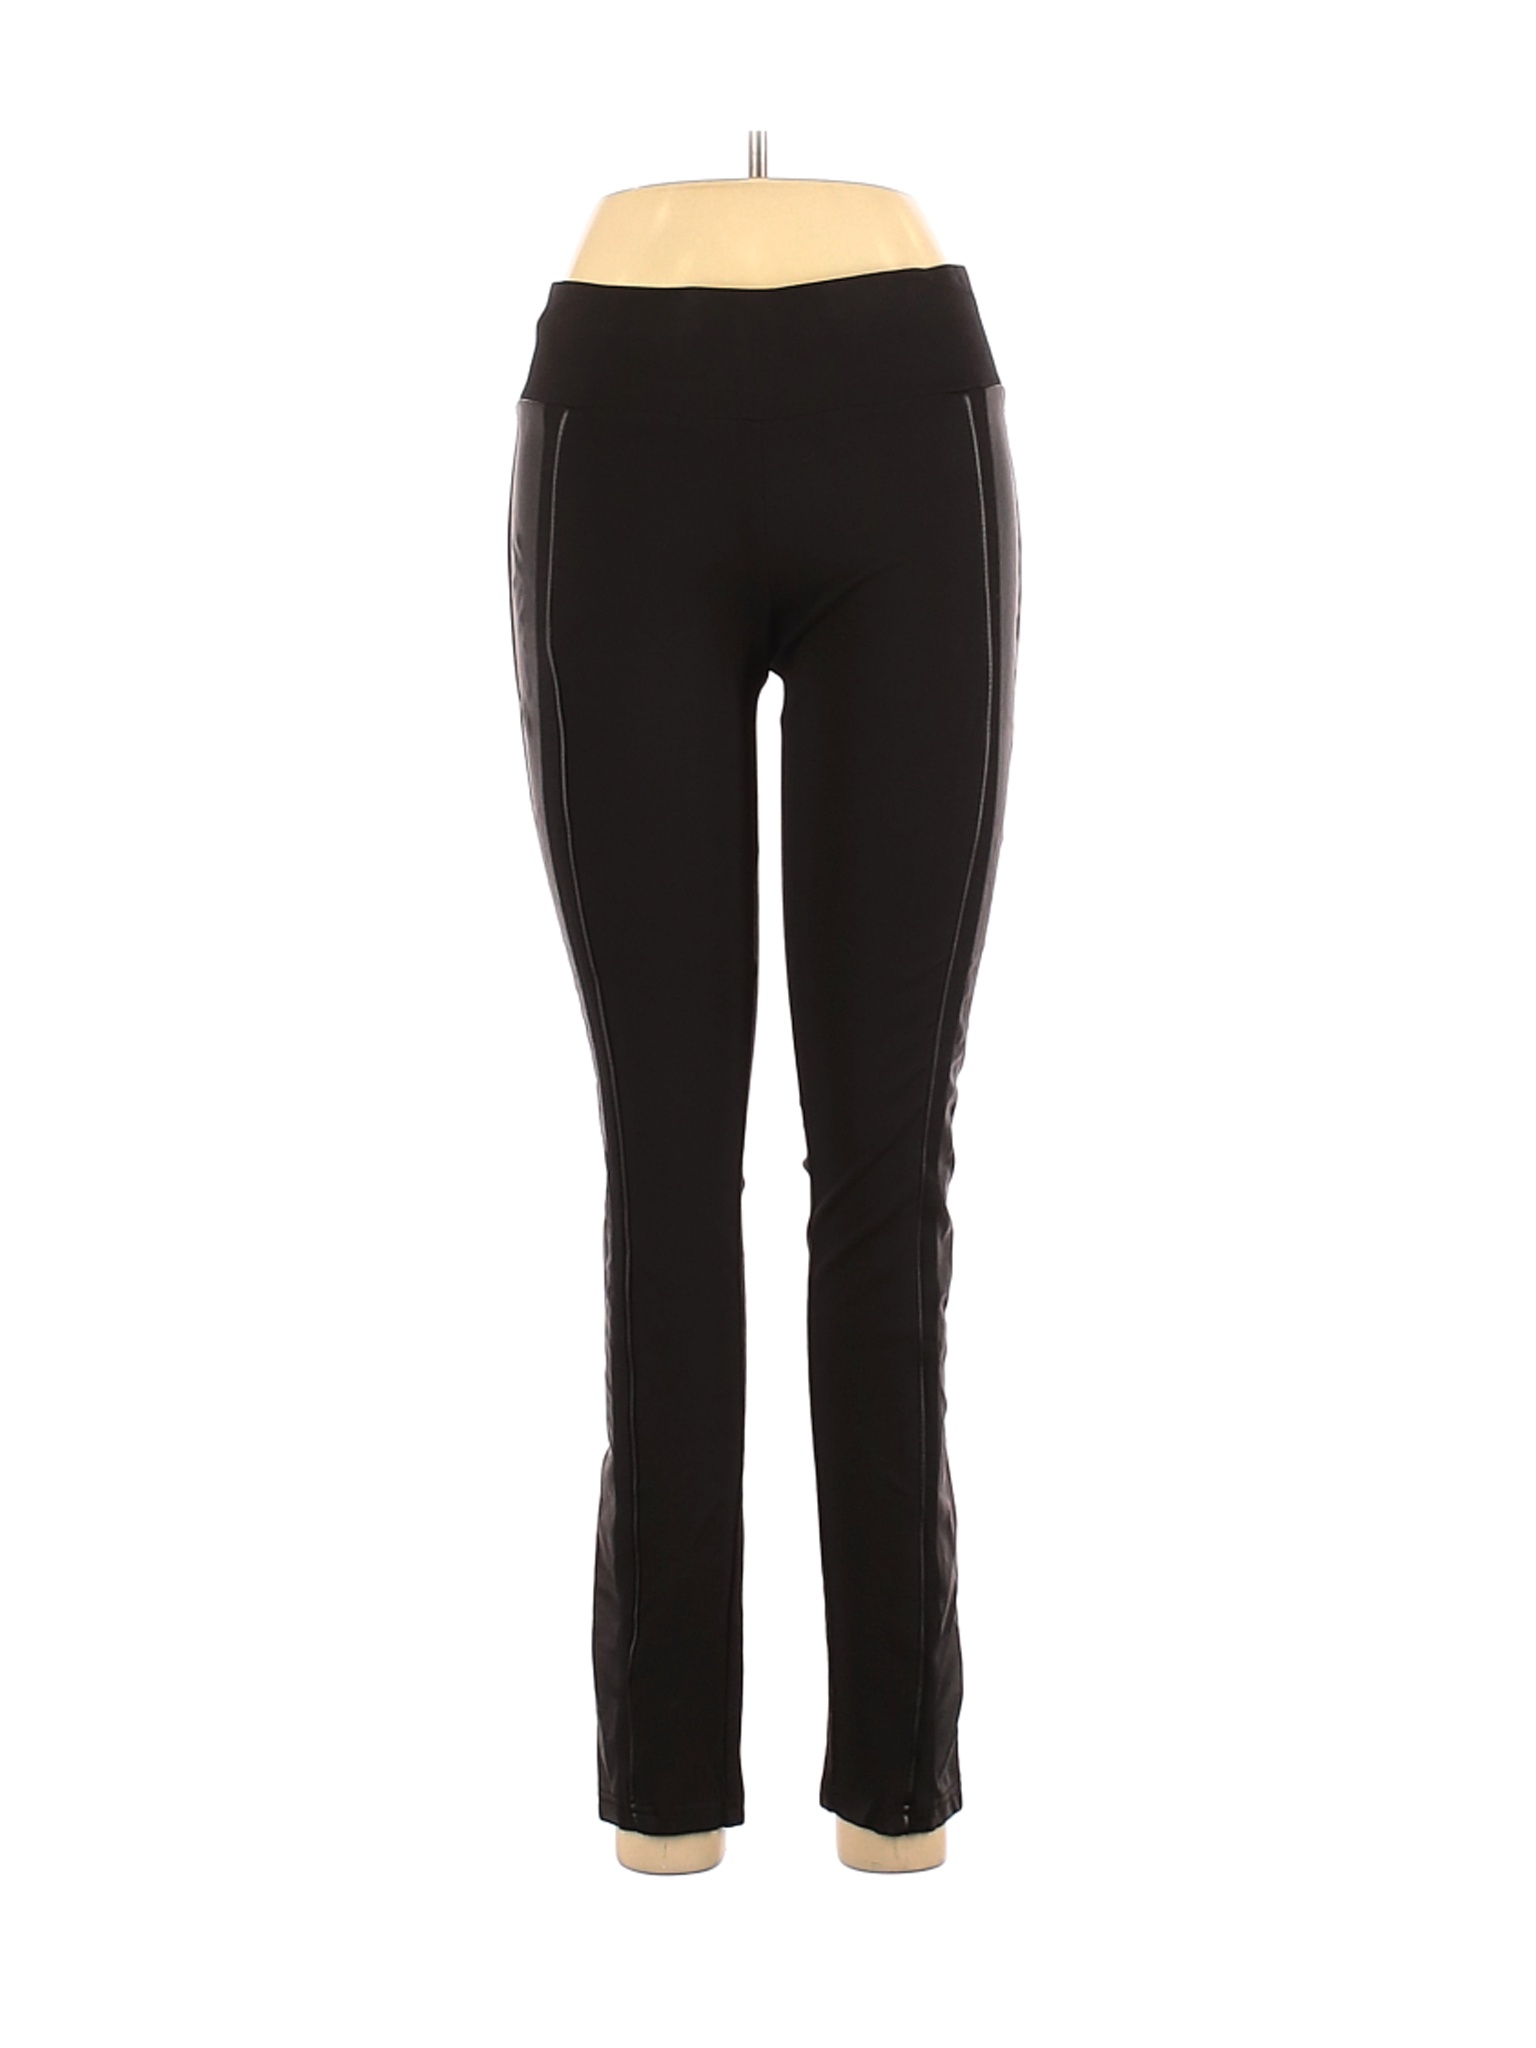 Copper Key Women Black Casual Pants M | eBay